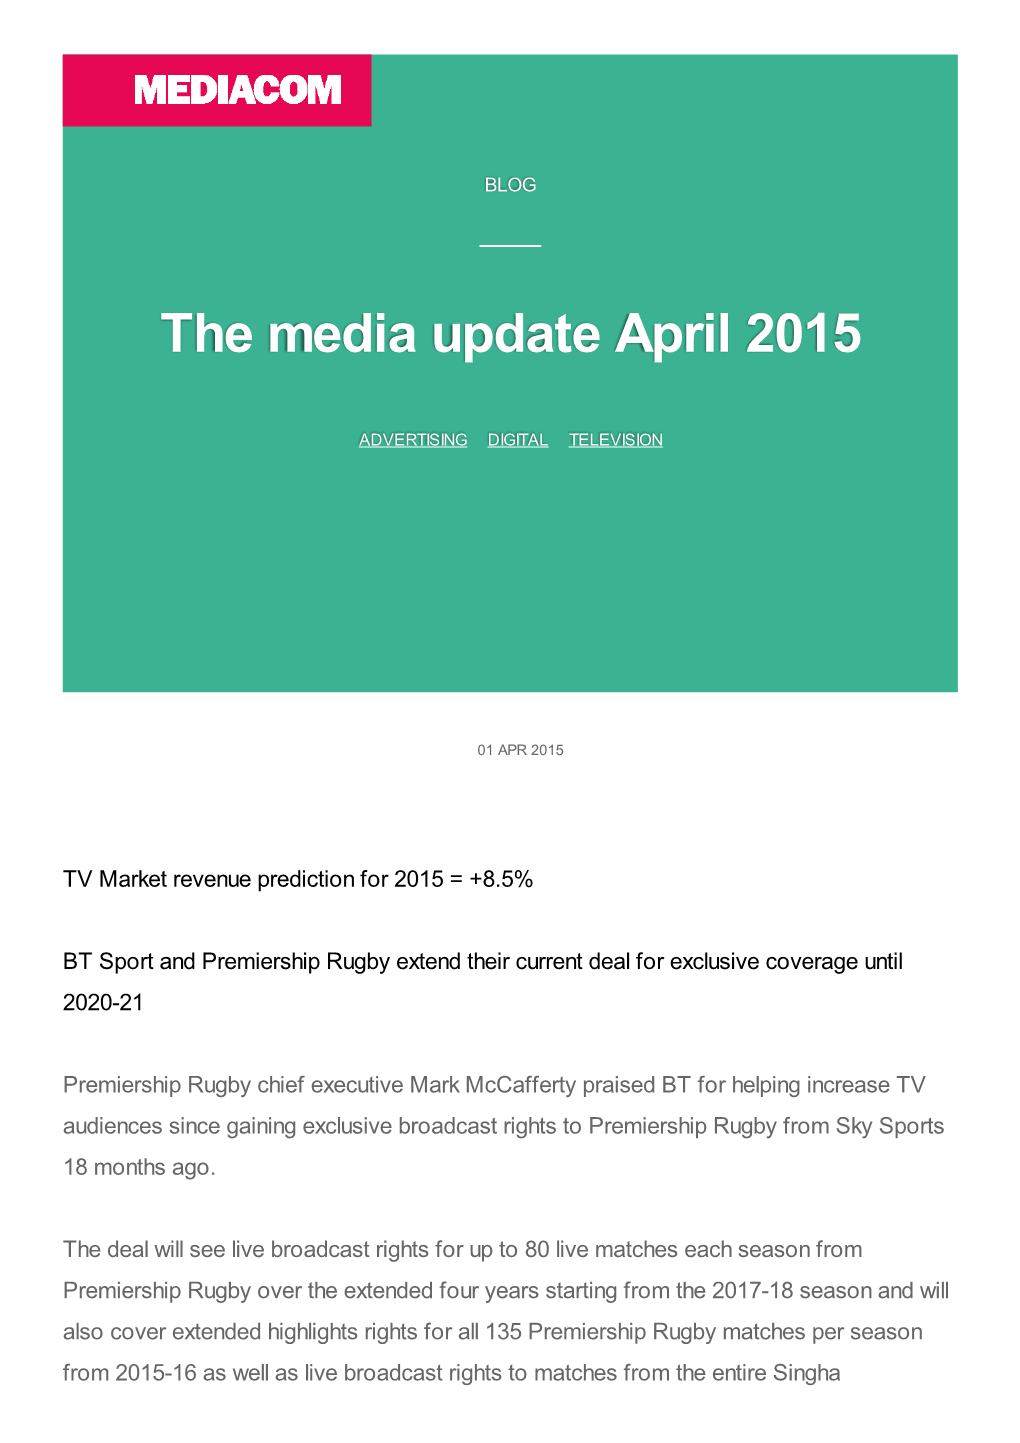 The Media Update April 2015